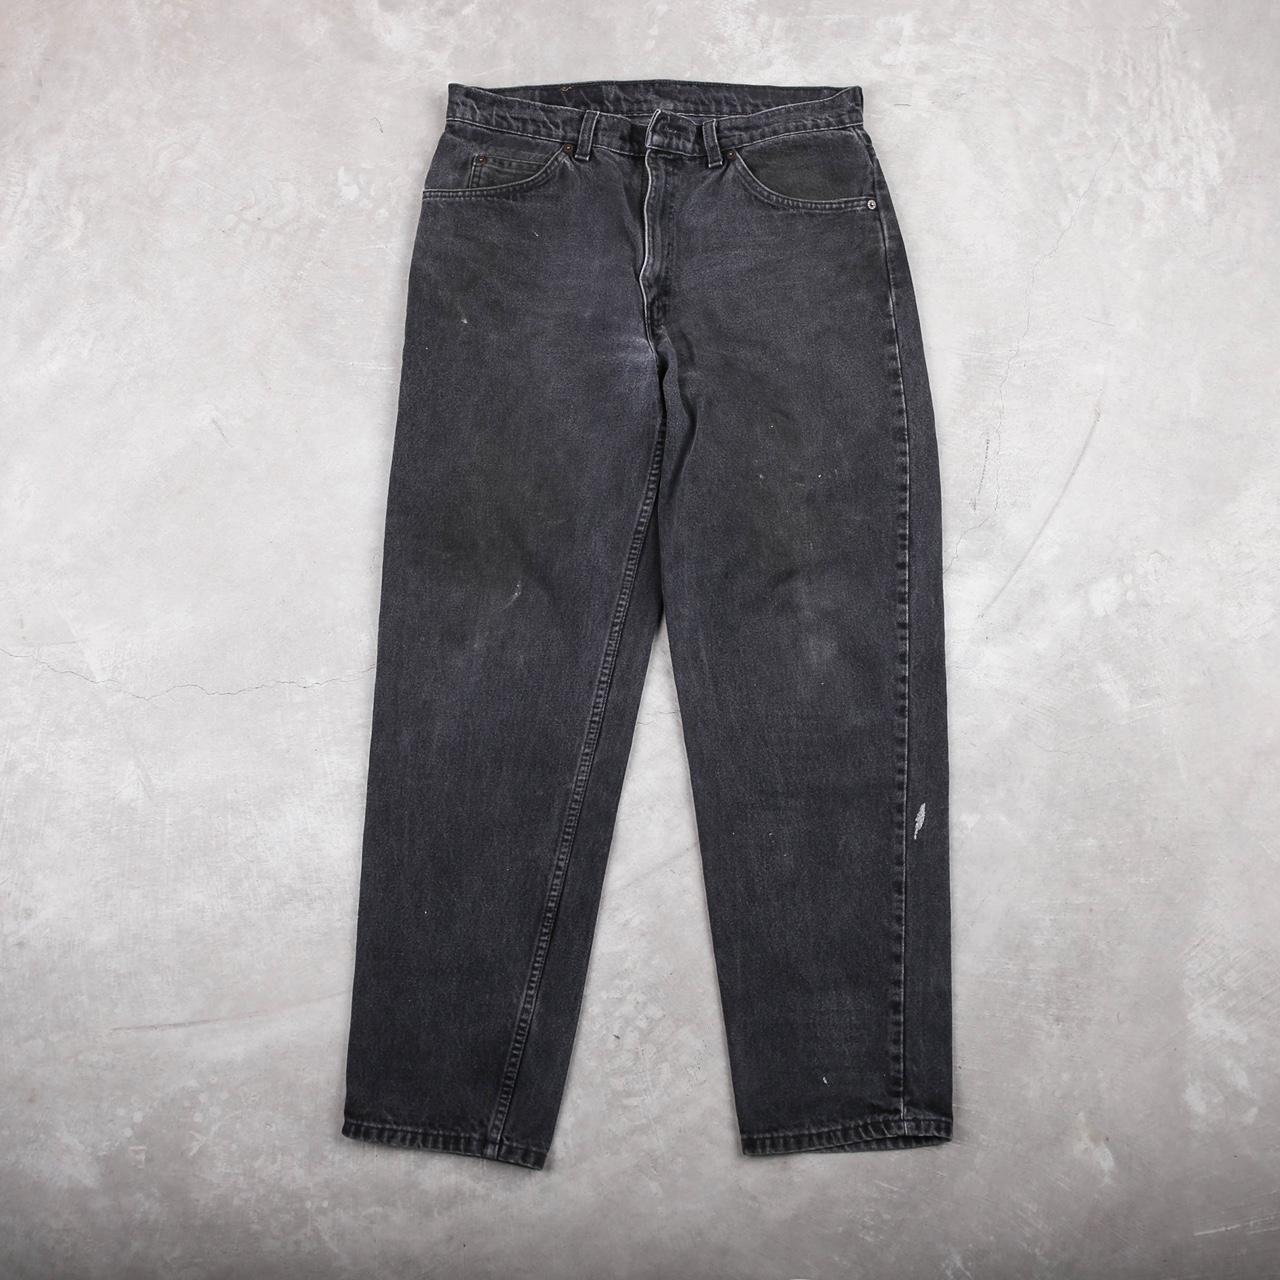 Vintage Levi’s jeans early 90s orange tab... - Depop